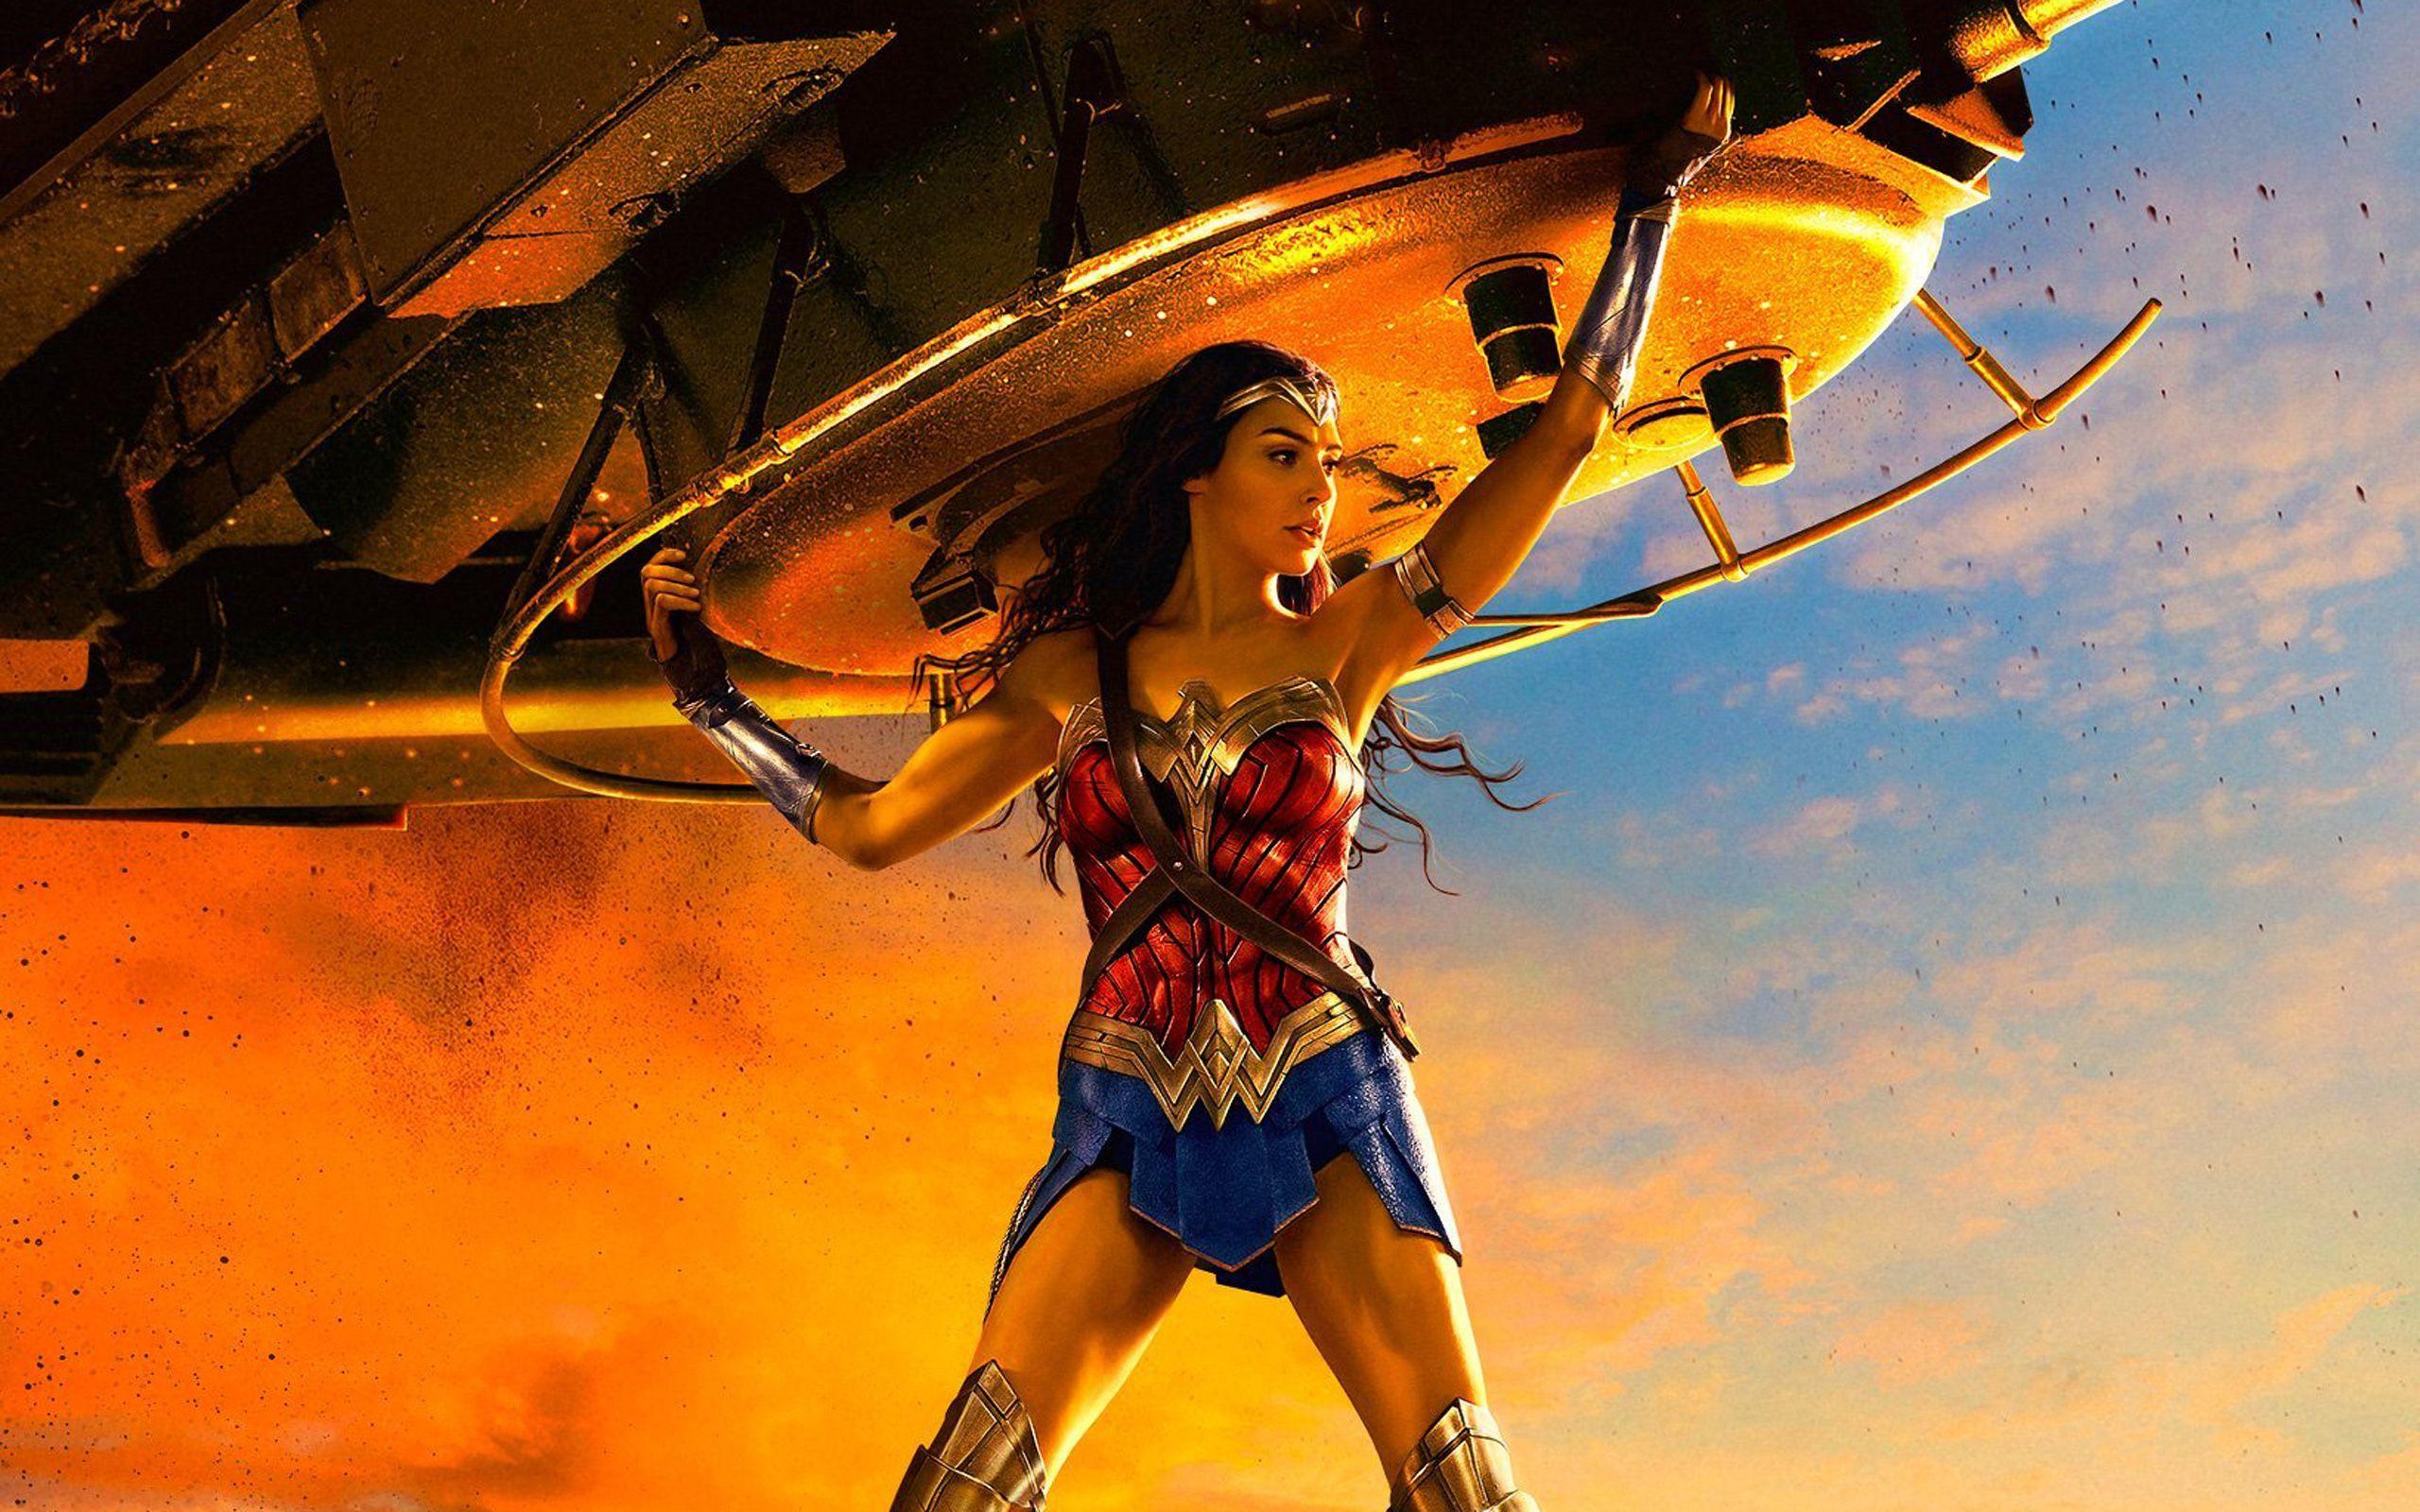 Wonder Woman Lifting Tank, HD Movies, 4k Wallpaper, Image